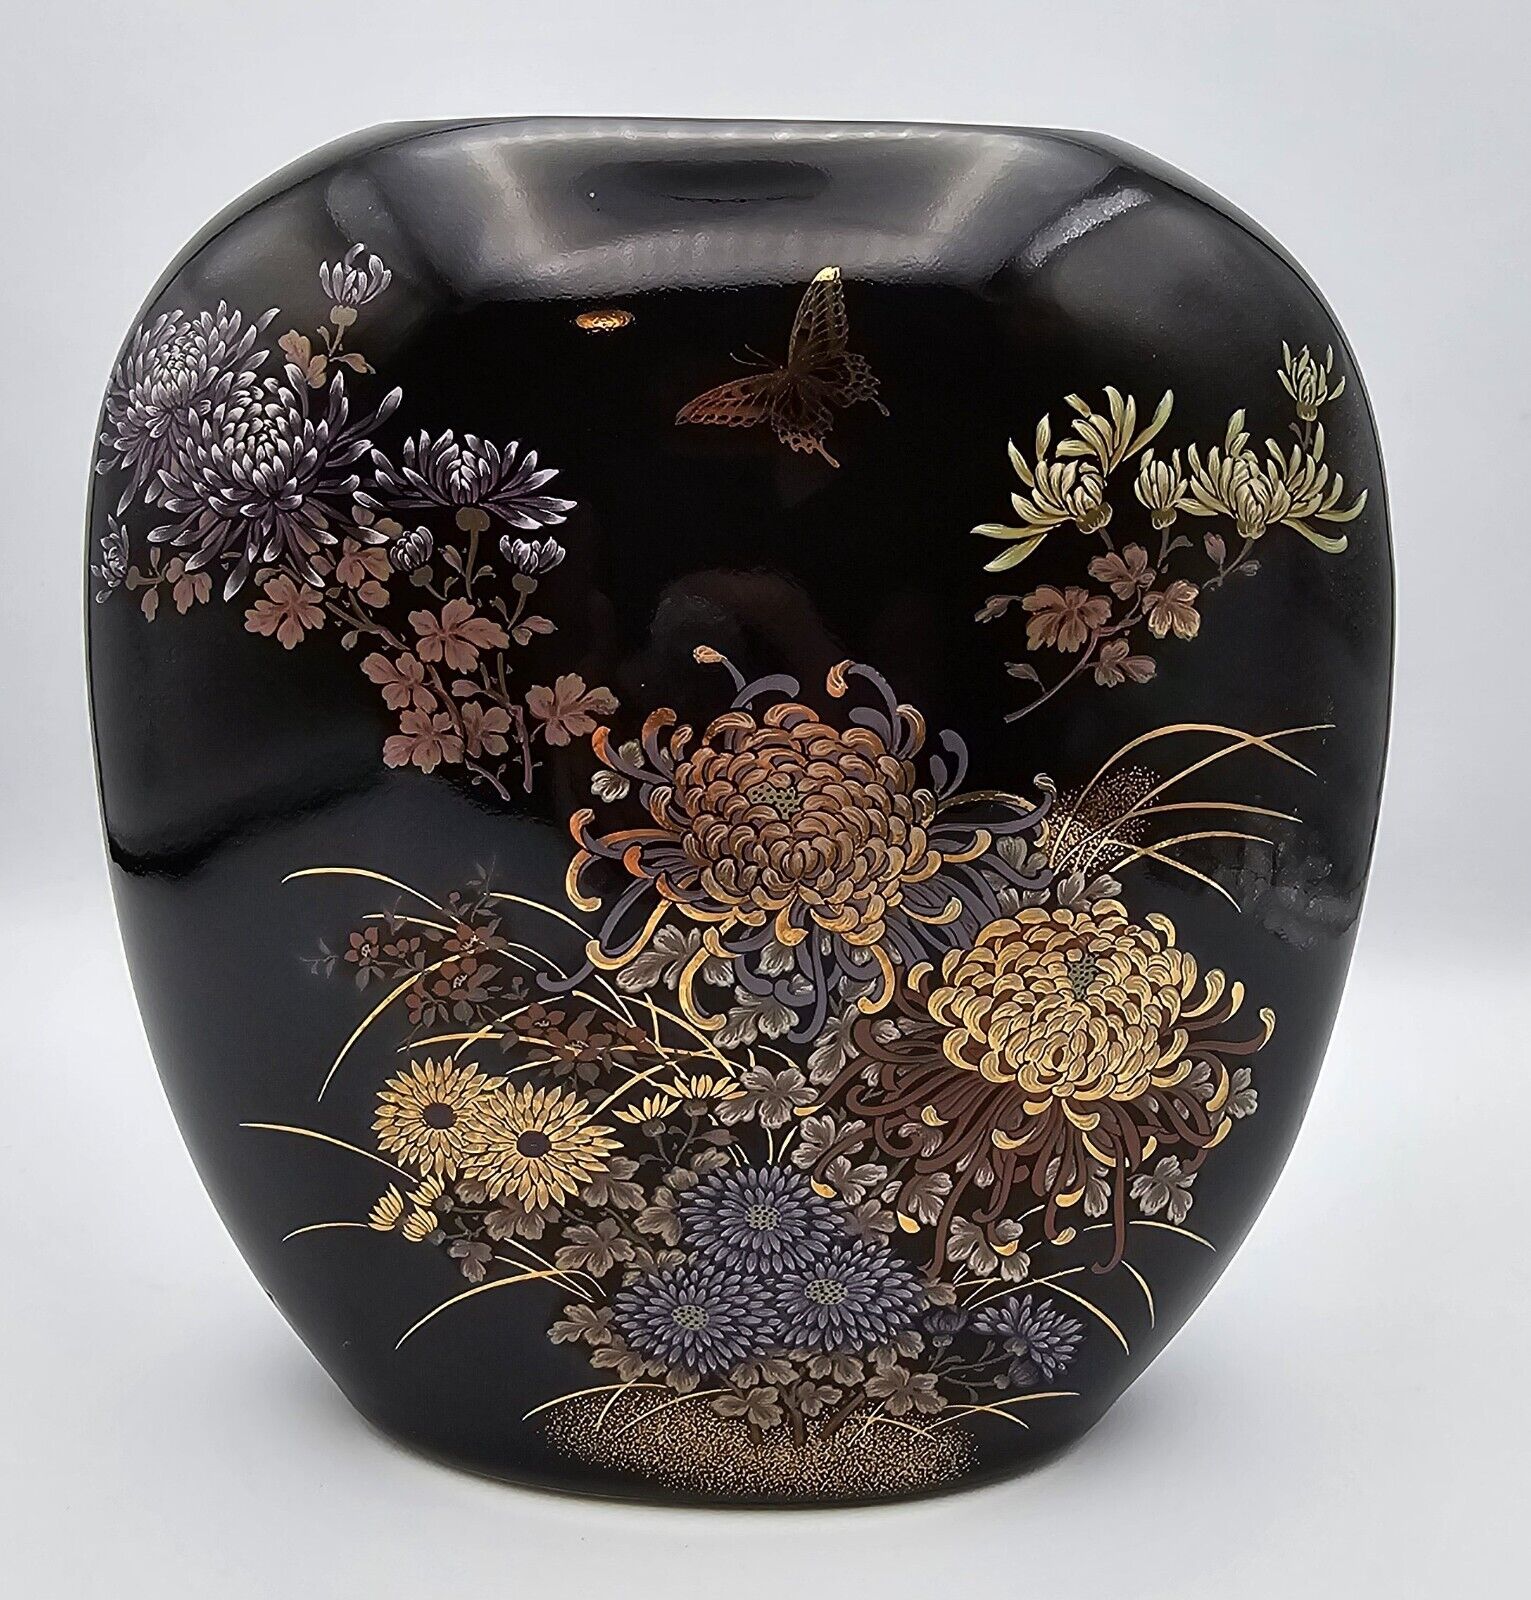 Vintage Porcelain Black Vase Shibata Japan Style with Butterflies & Flowers